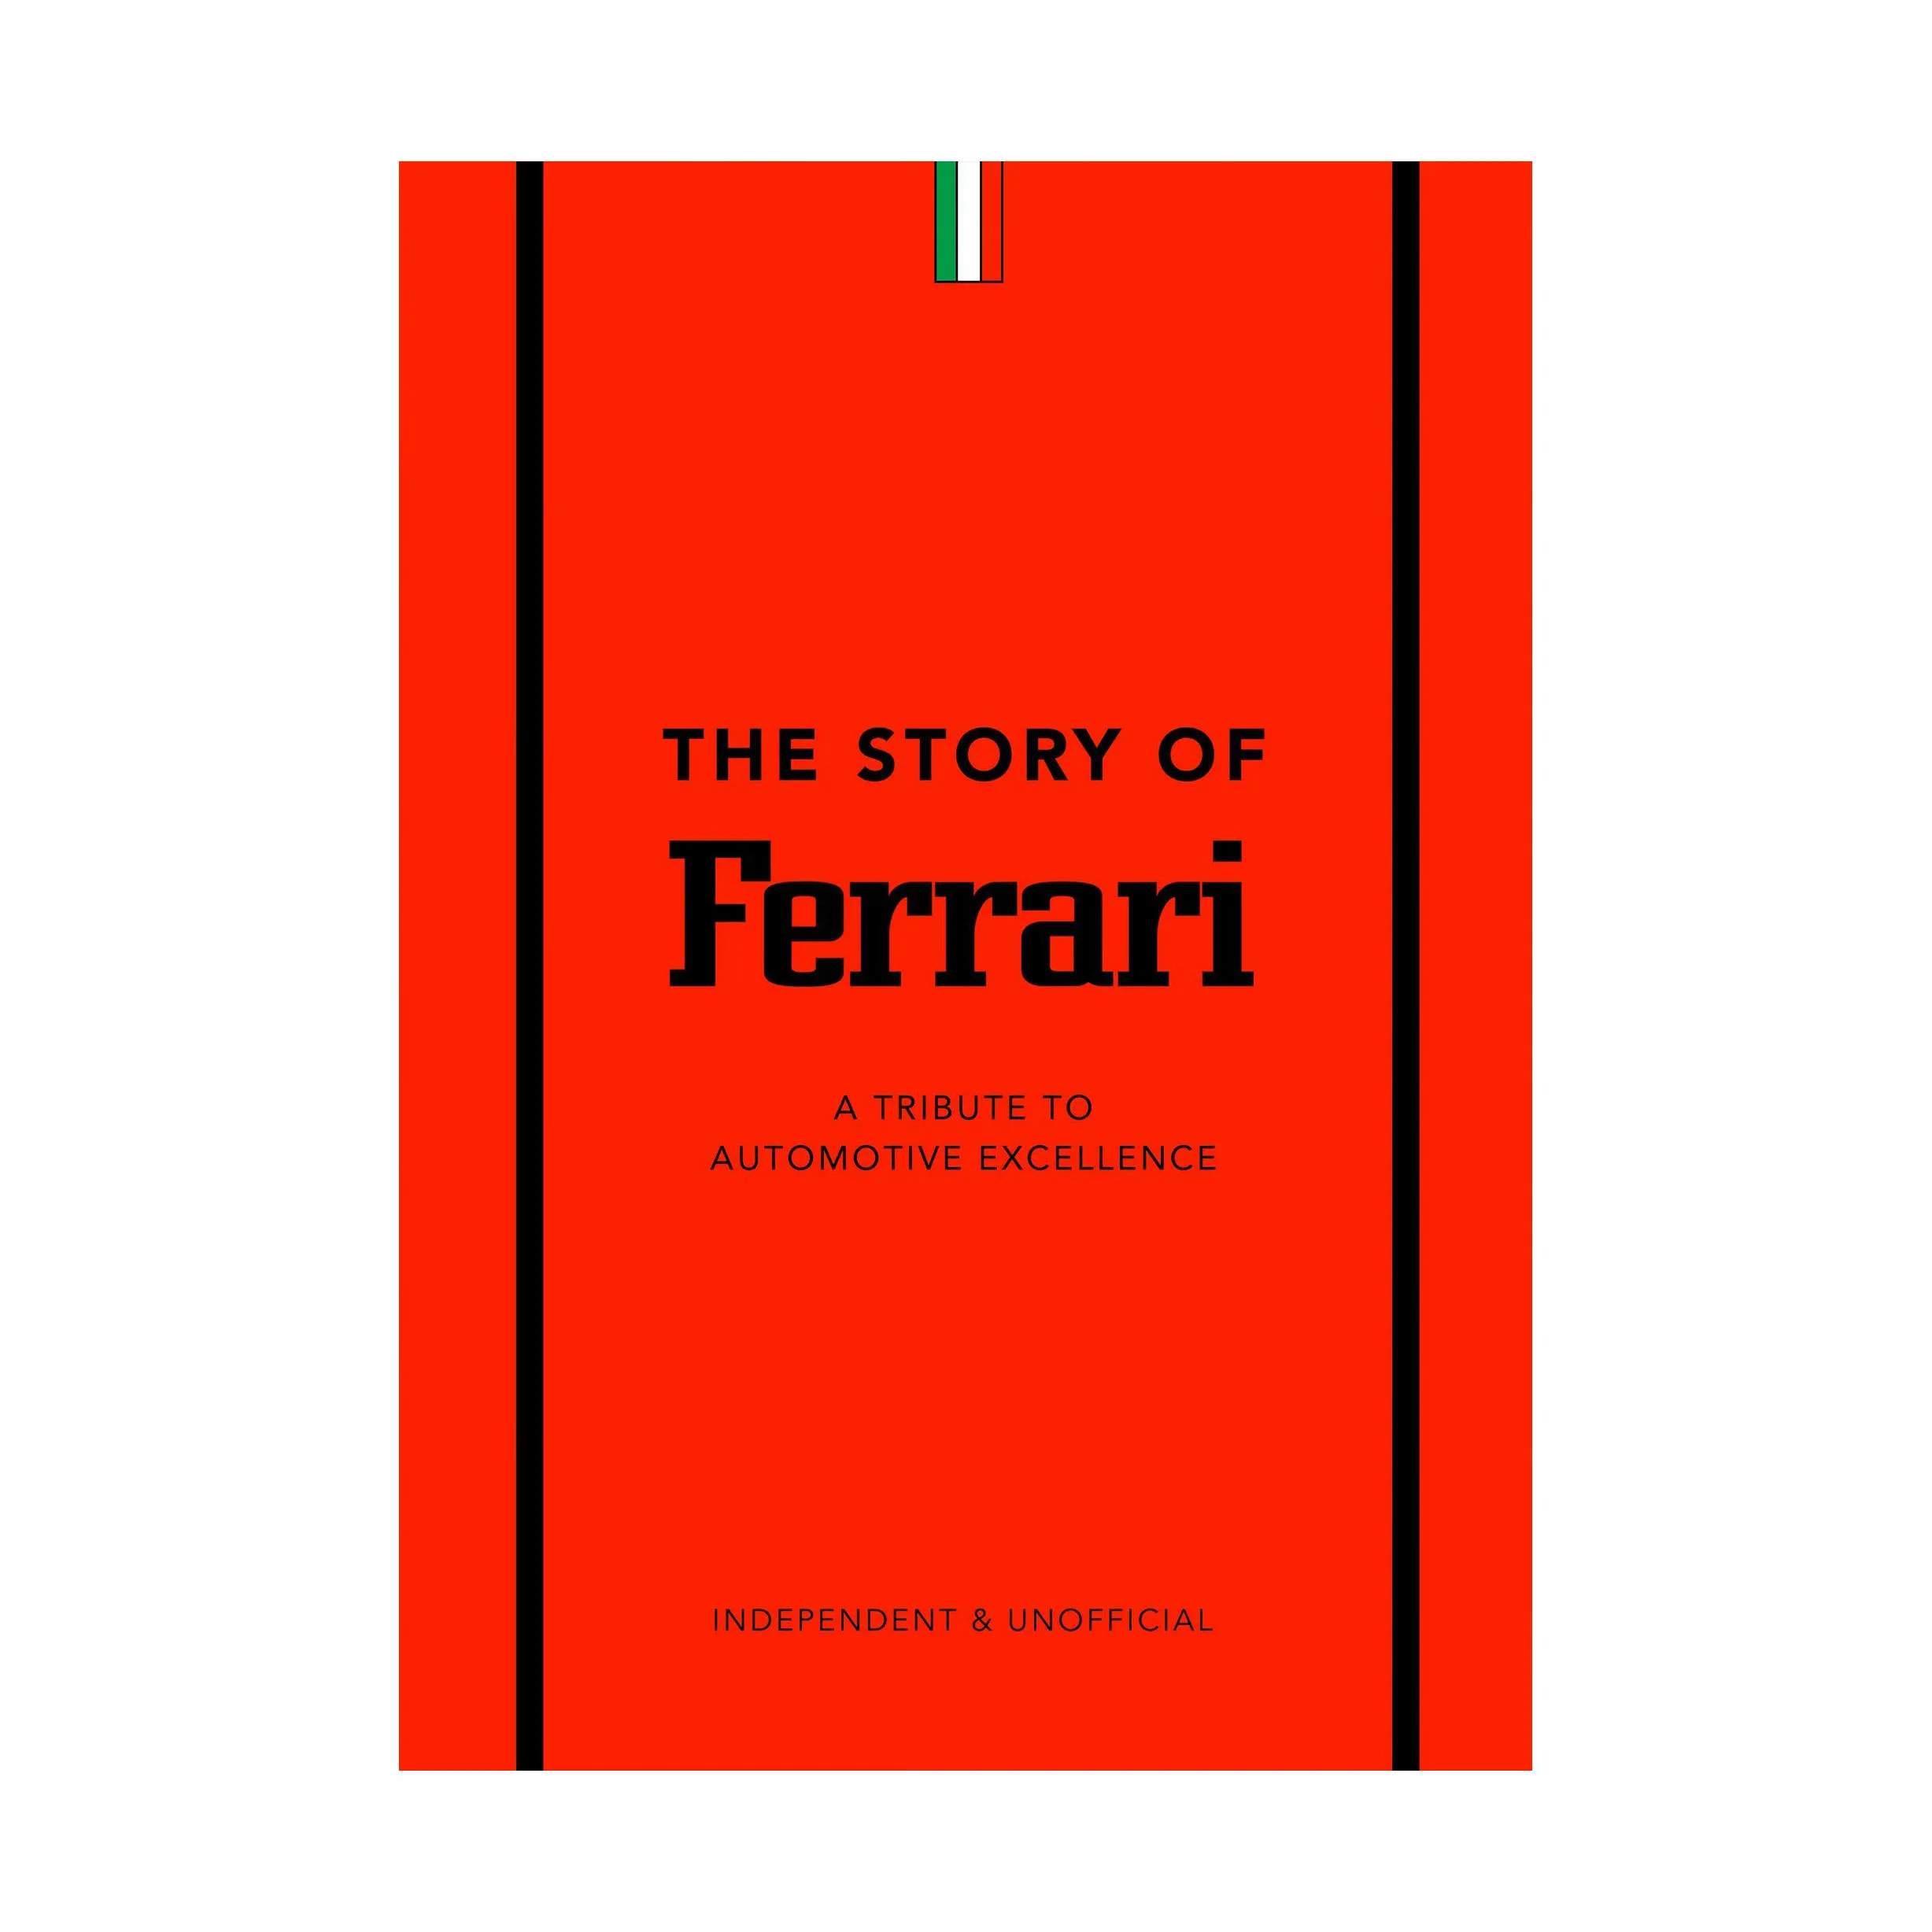 The Story of Ferrari øvrige bøger